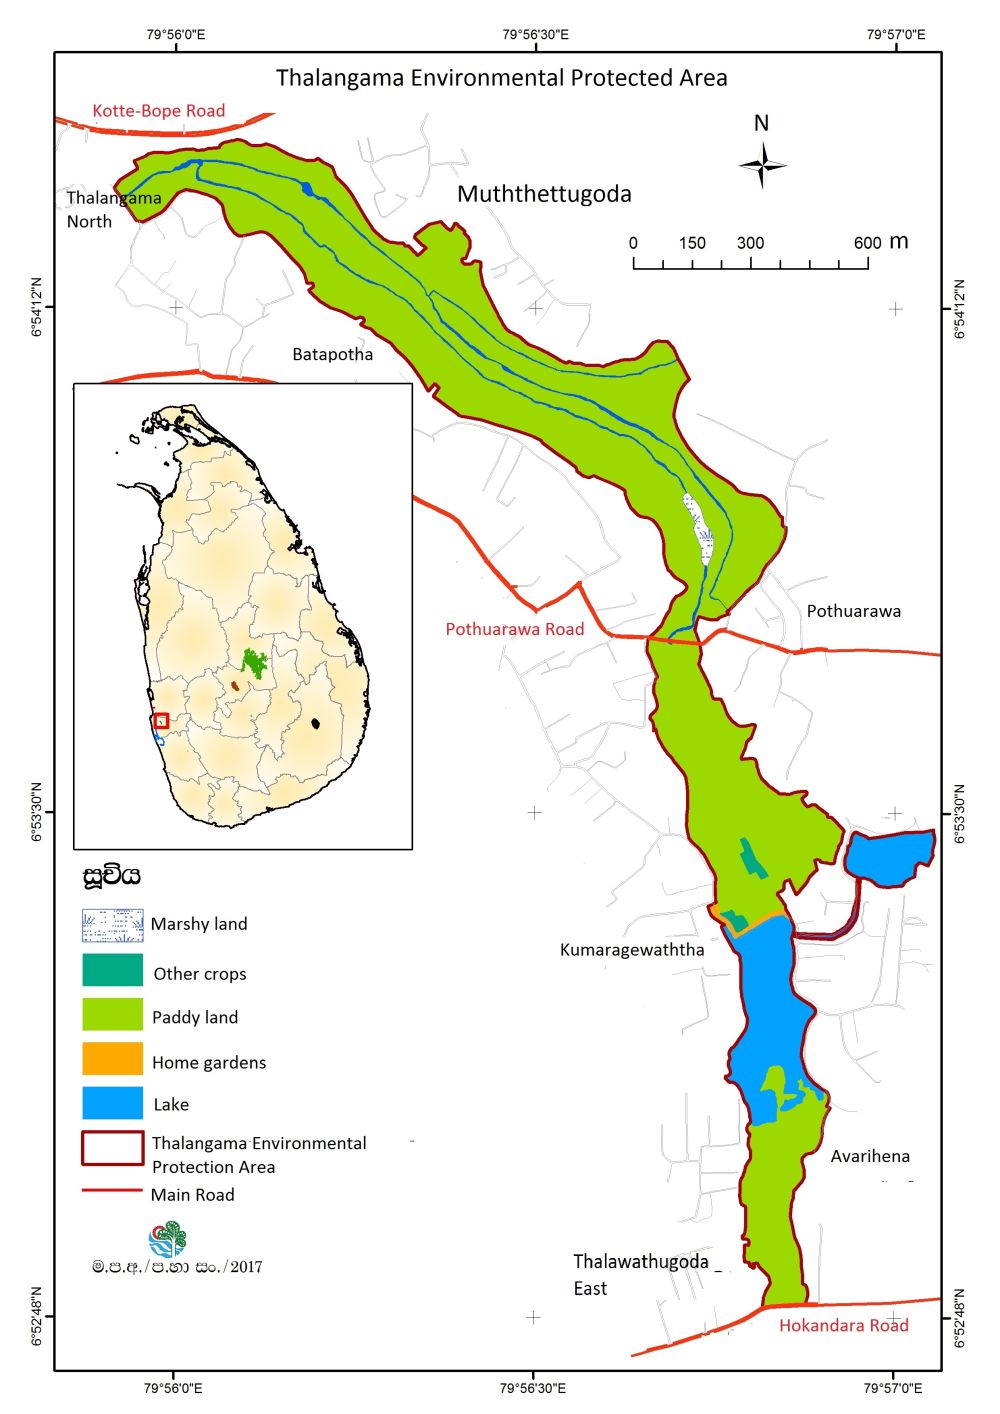 Thalangama Environmental Protection Area